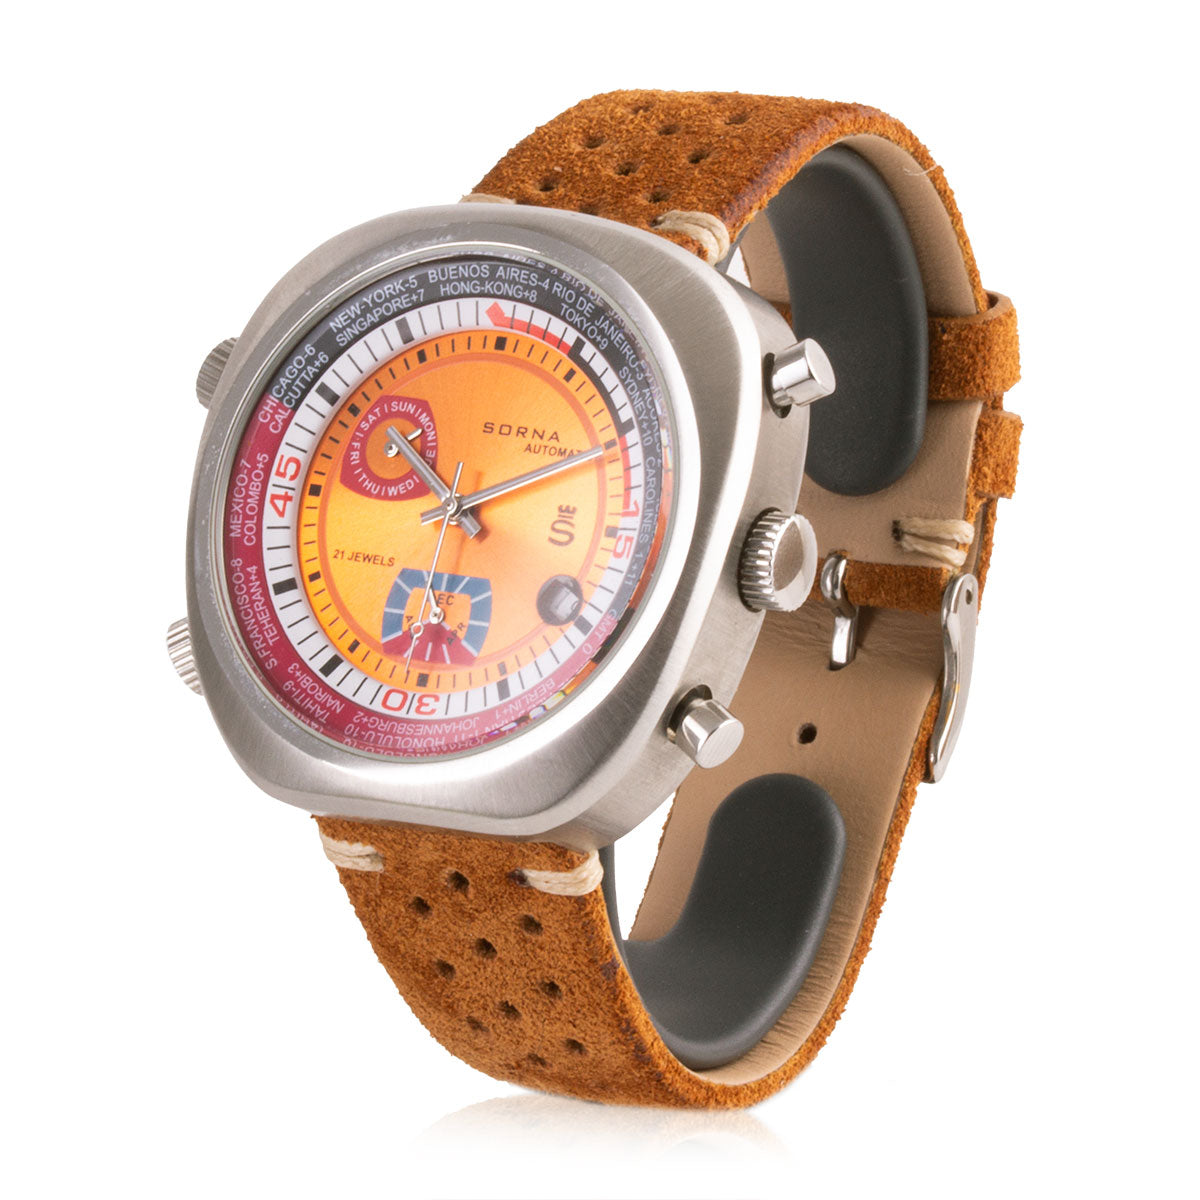 Second-hand watch - Sorna Diver - 850€